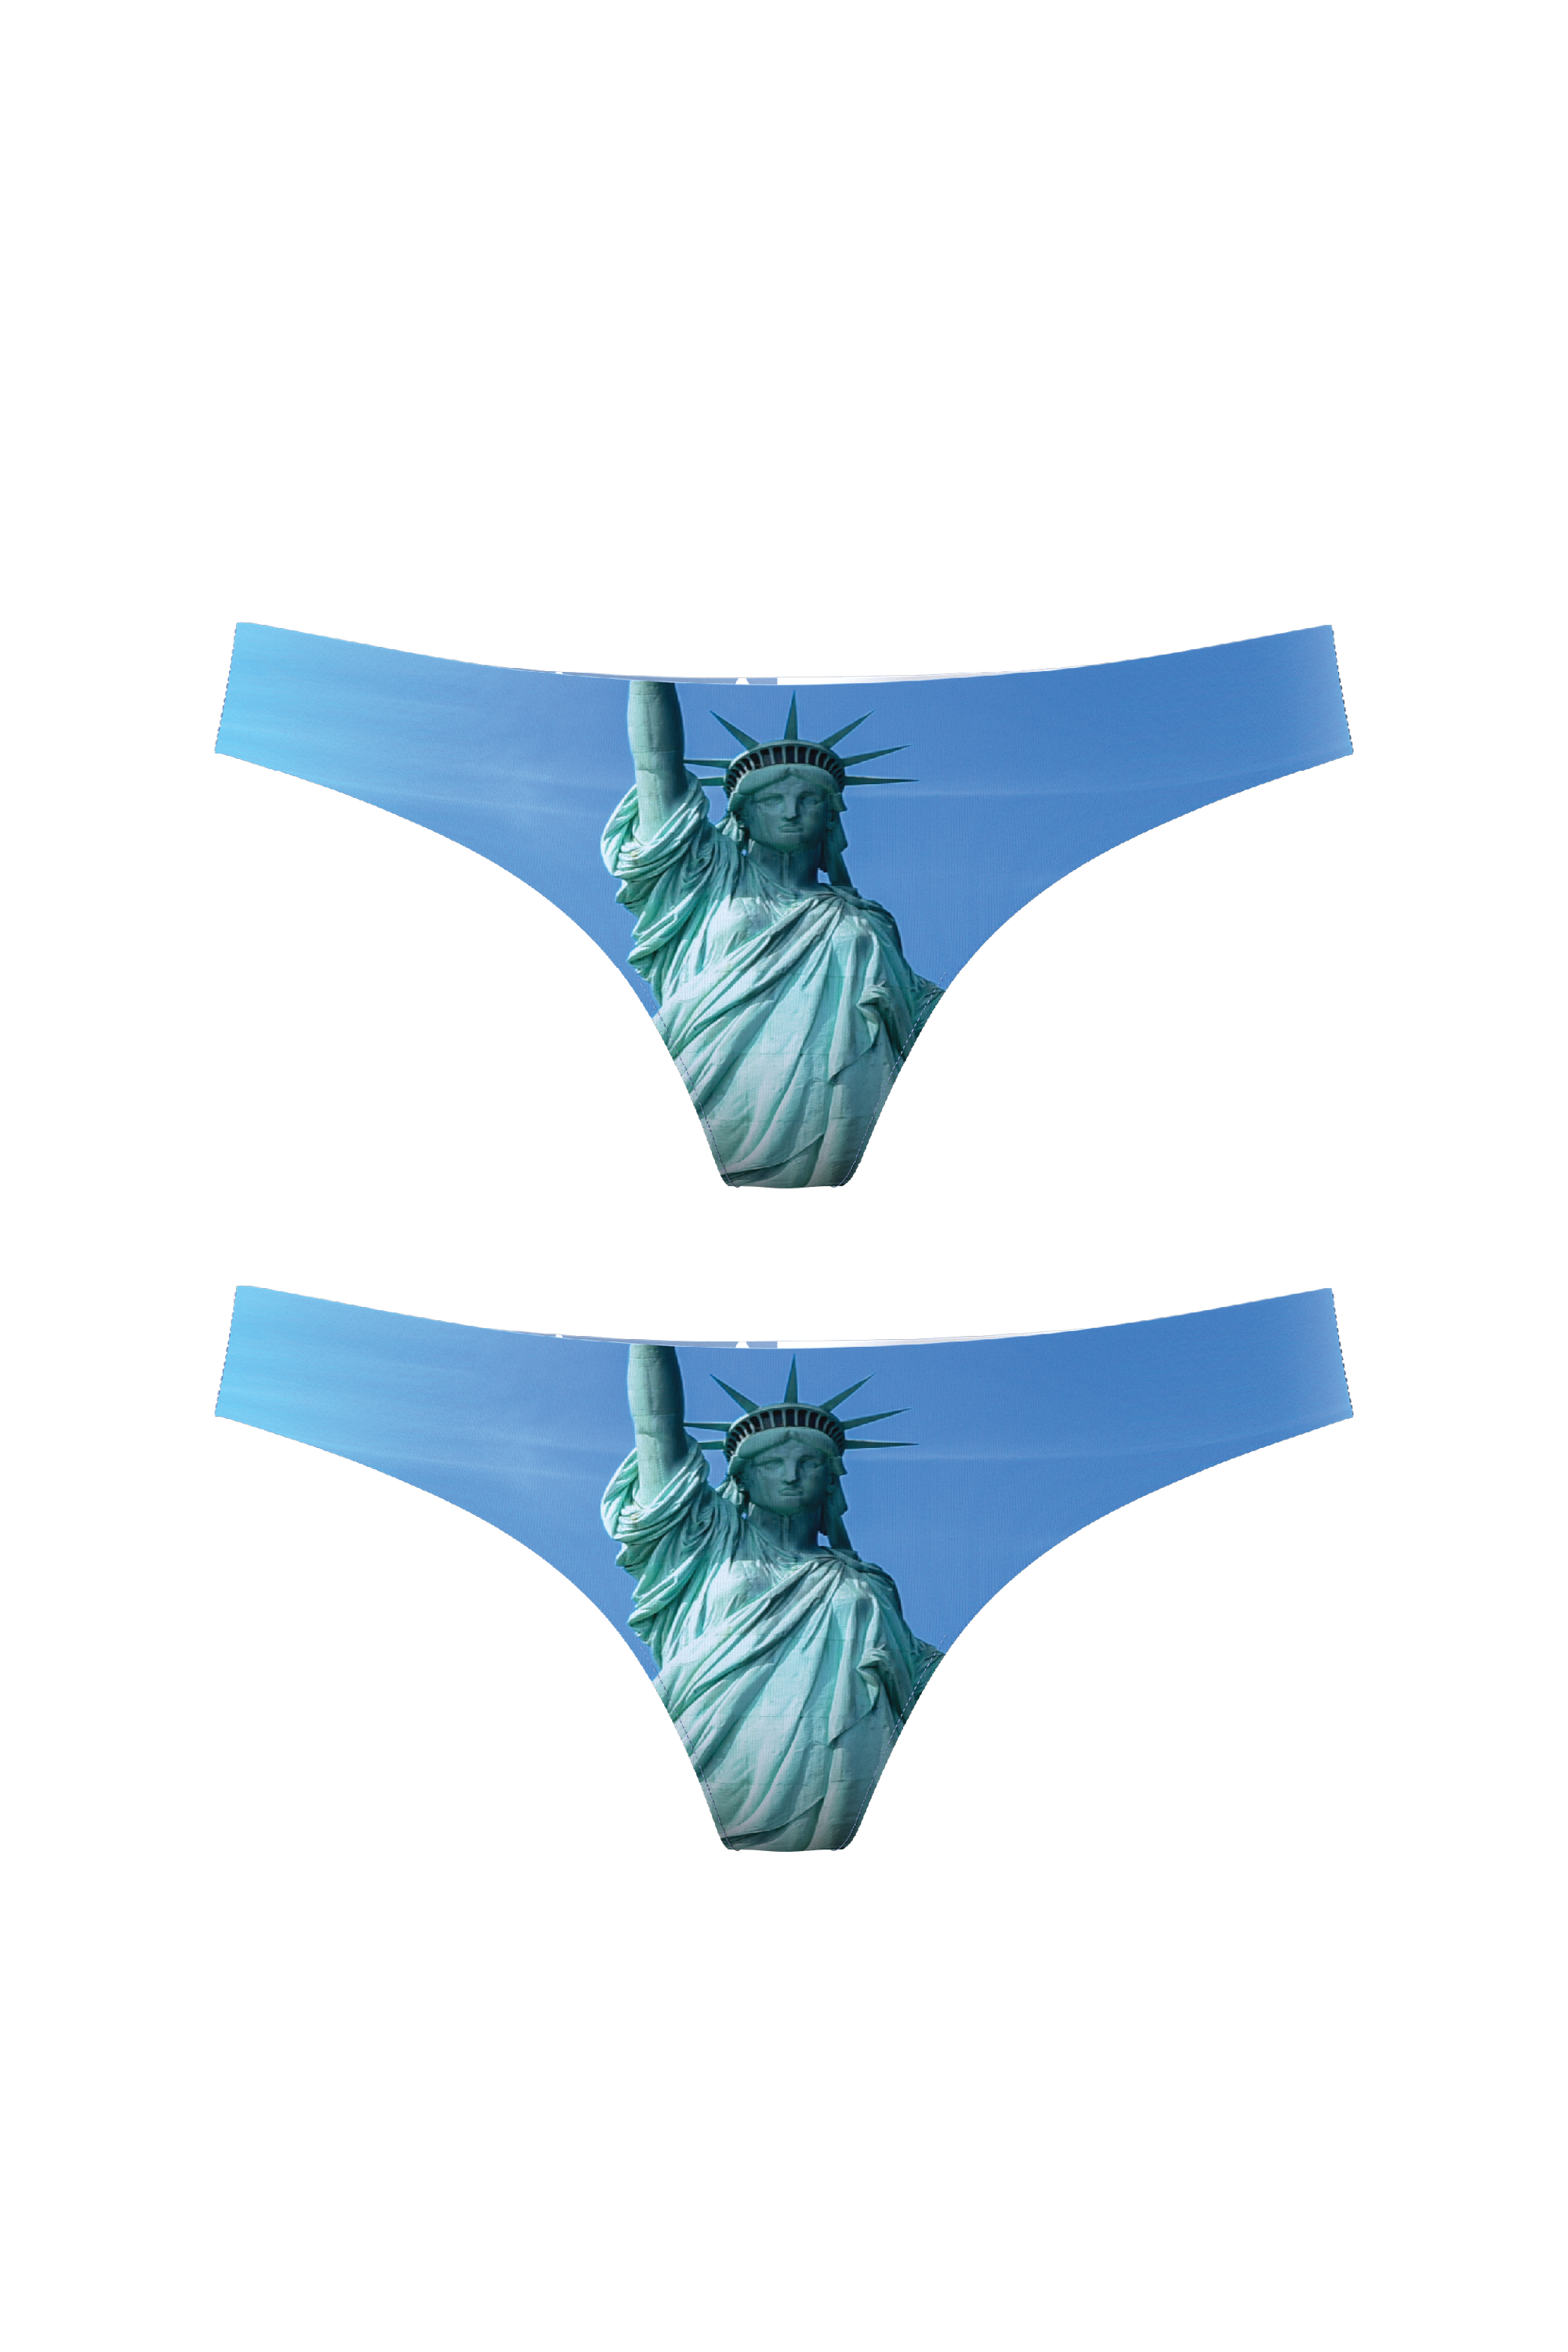 Buy GenericCouples Underwear Matching Set, His and Hers Underwear